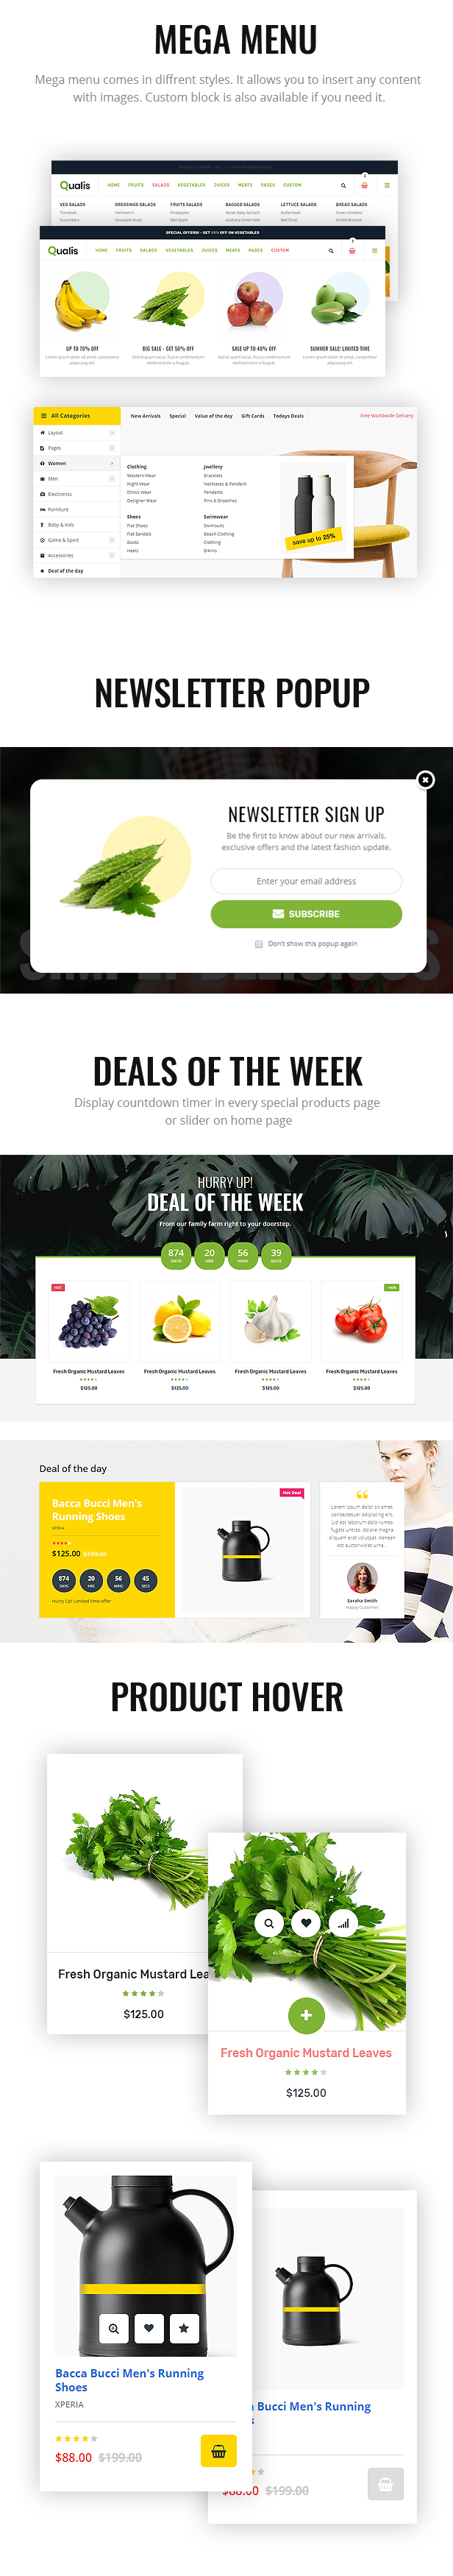 Qualis - Responsives E-Commerce-WordPress-Layout für Bio-Lebensmittel - 3